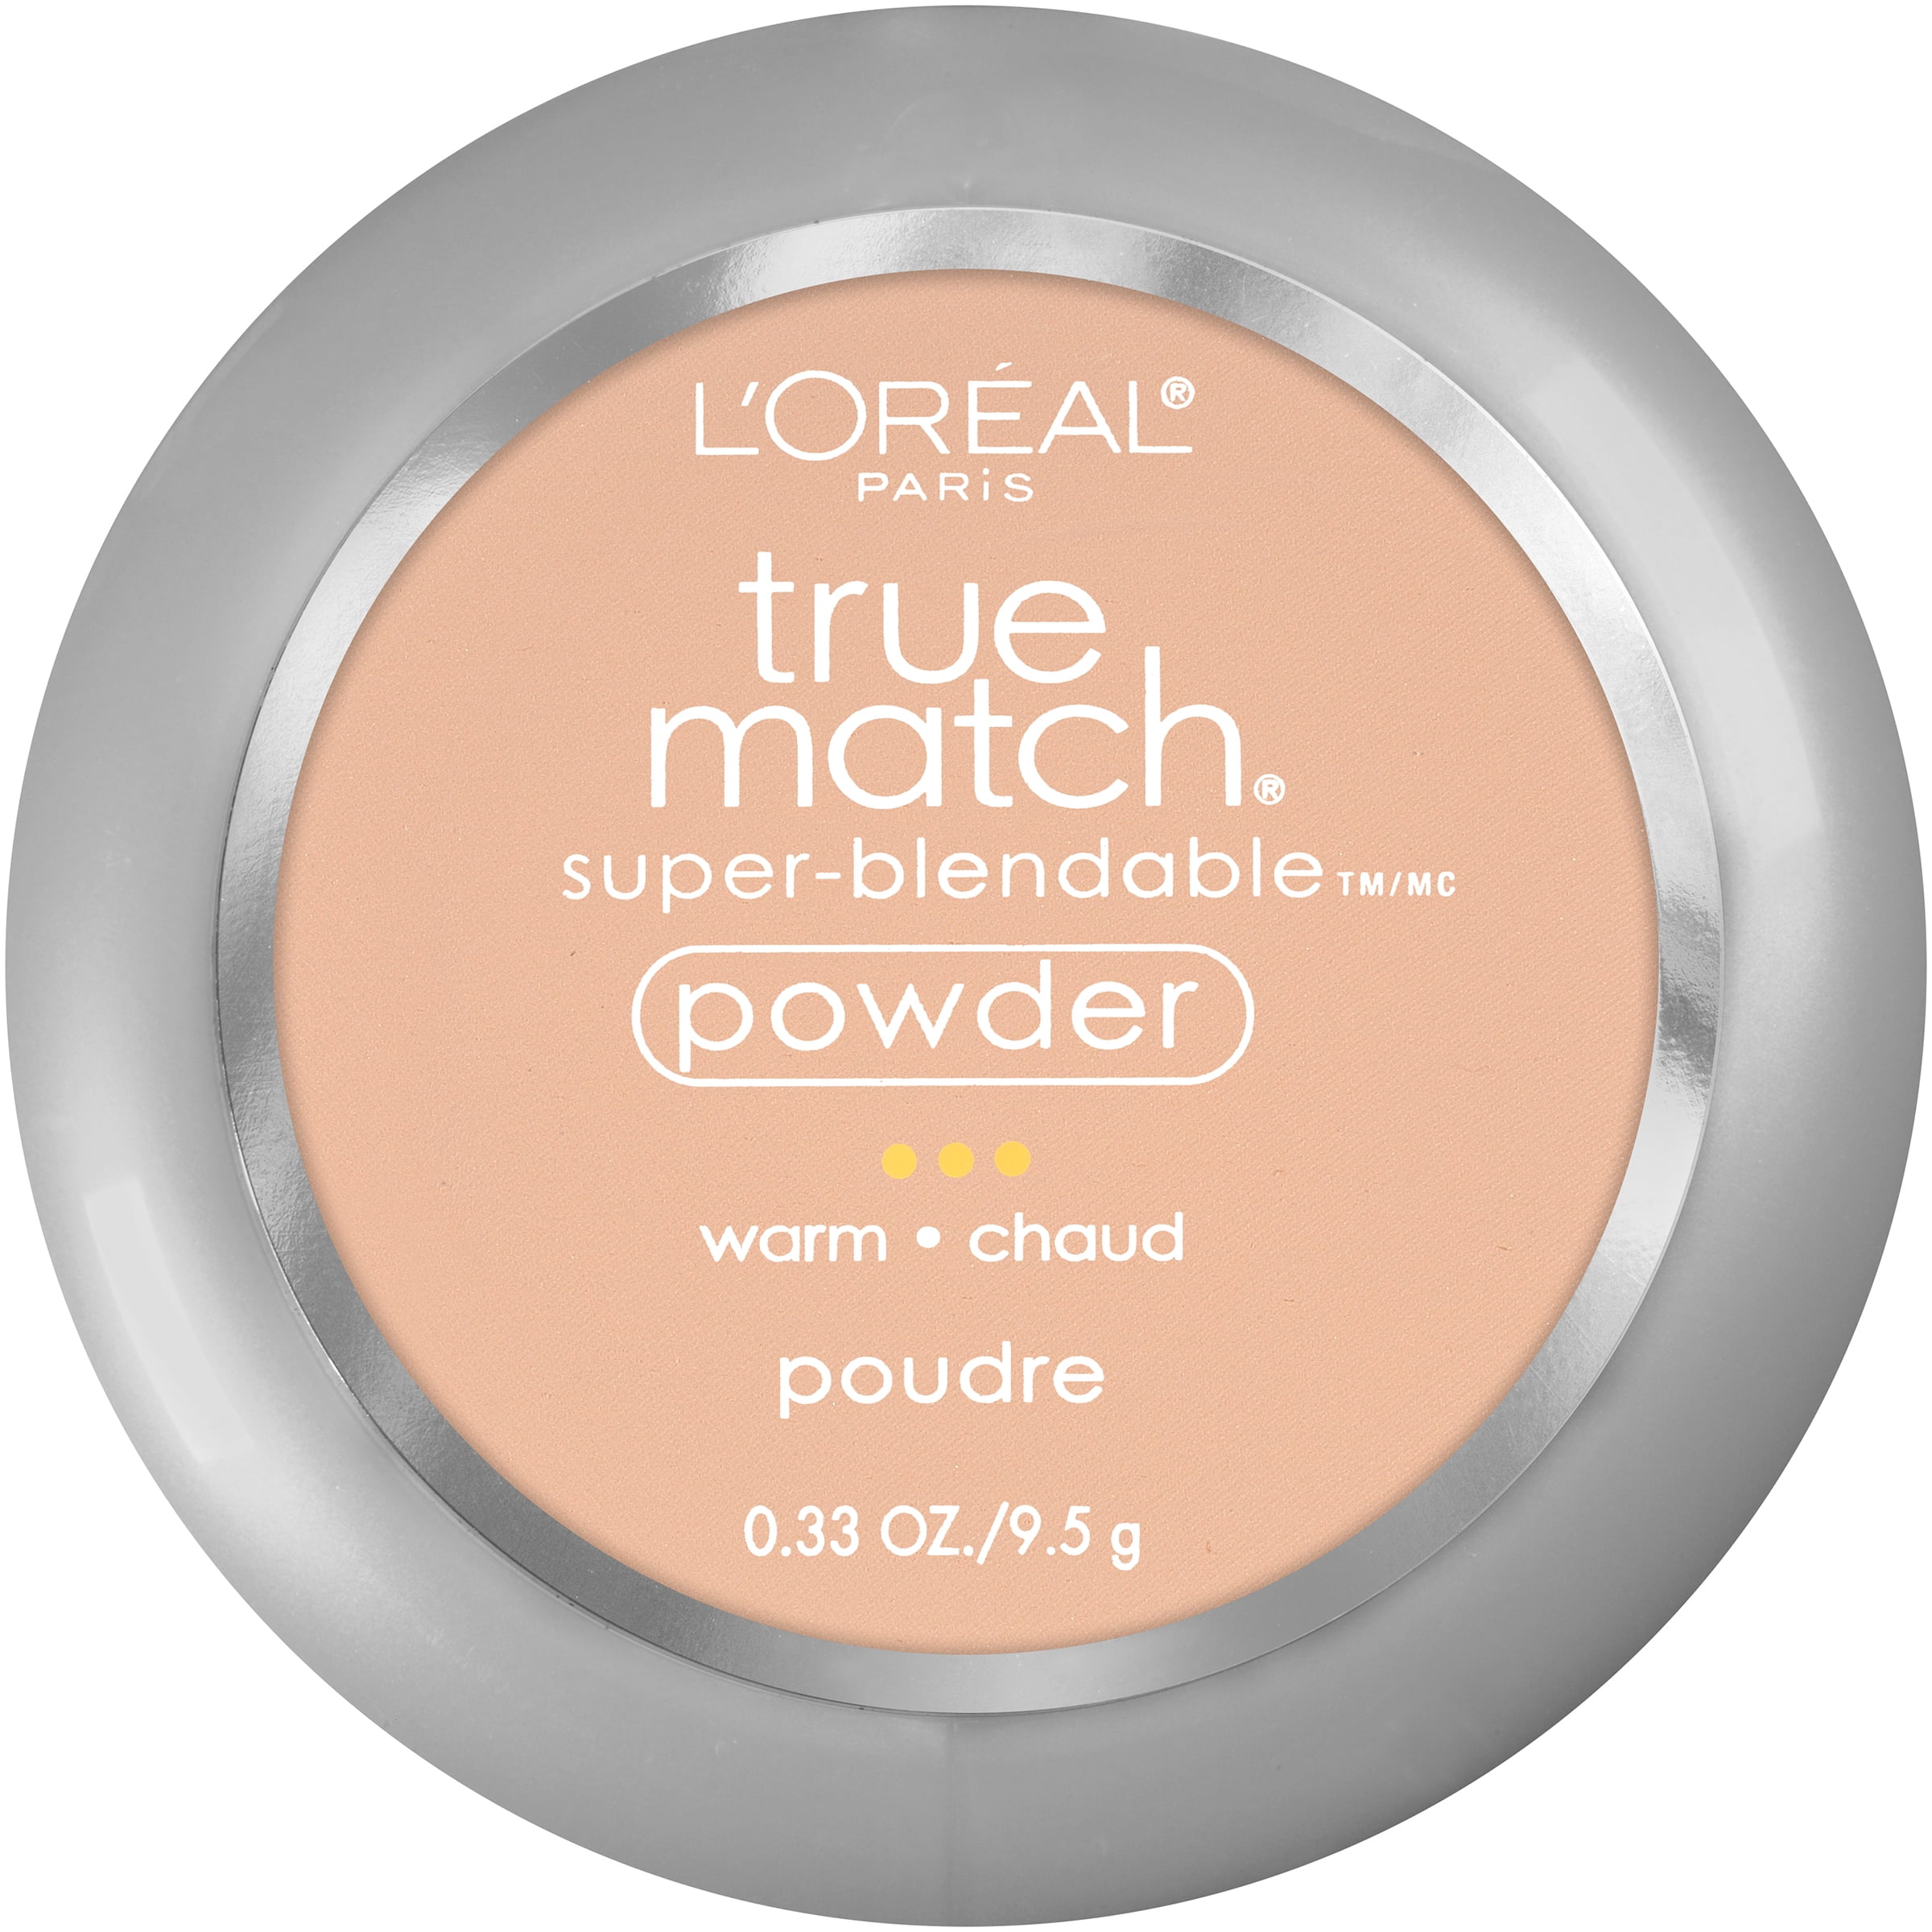 L'Oreal Paris True Match Super-Blendable Oil Free Makeup Powder